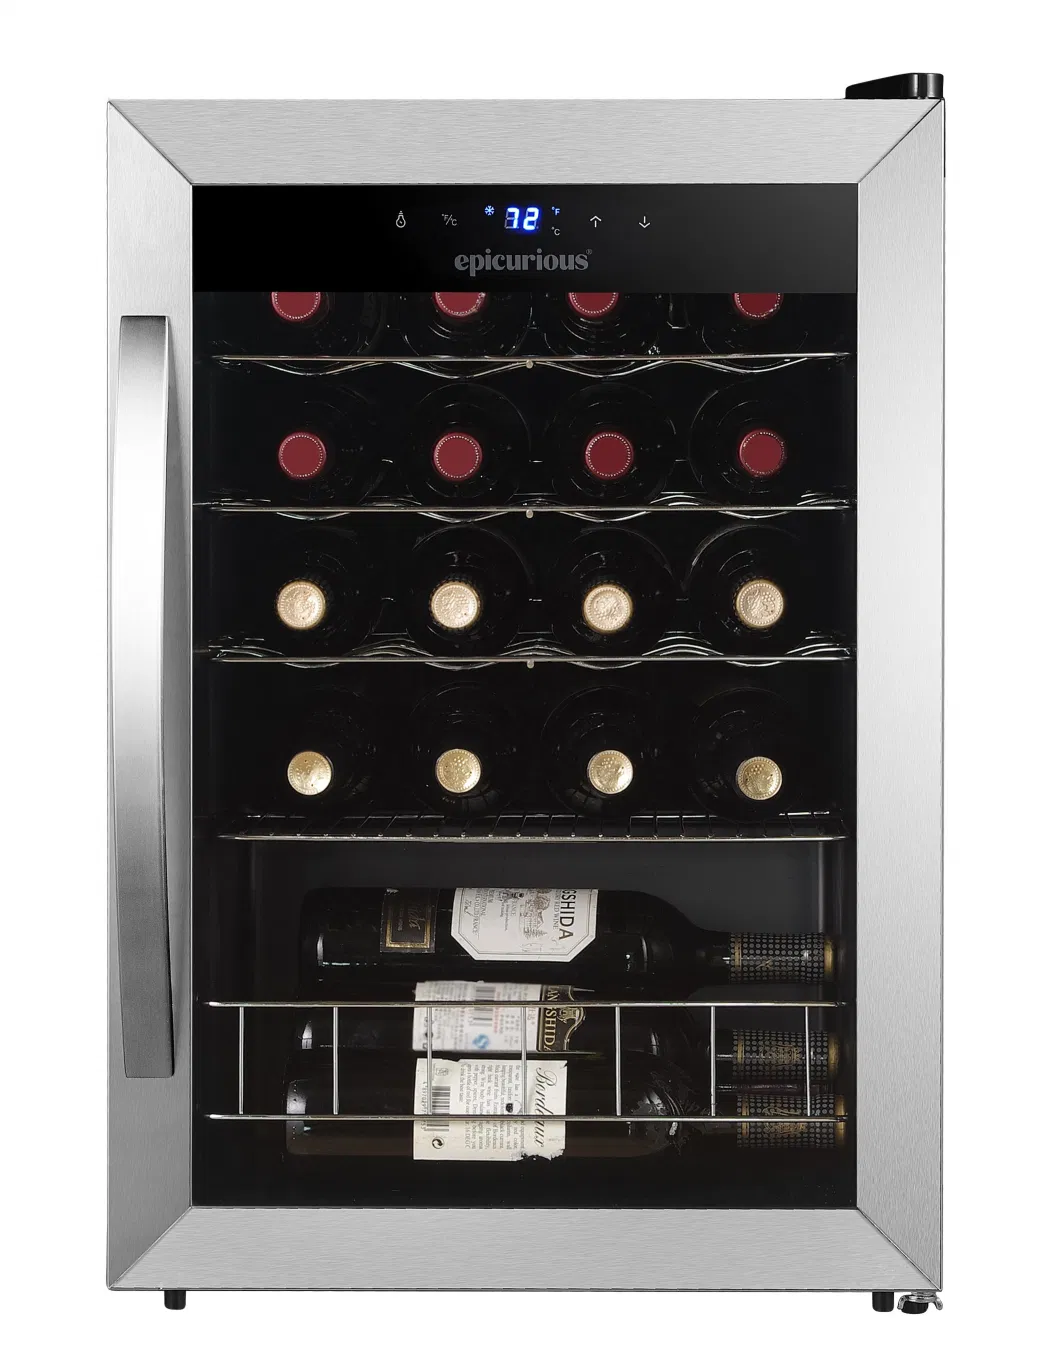 OEM Custom Stylish Full Glass Design Compressor 19 Bottle Wine Chiller Wine Cooler Refrigerator Appliance